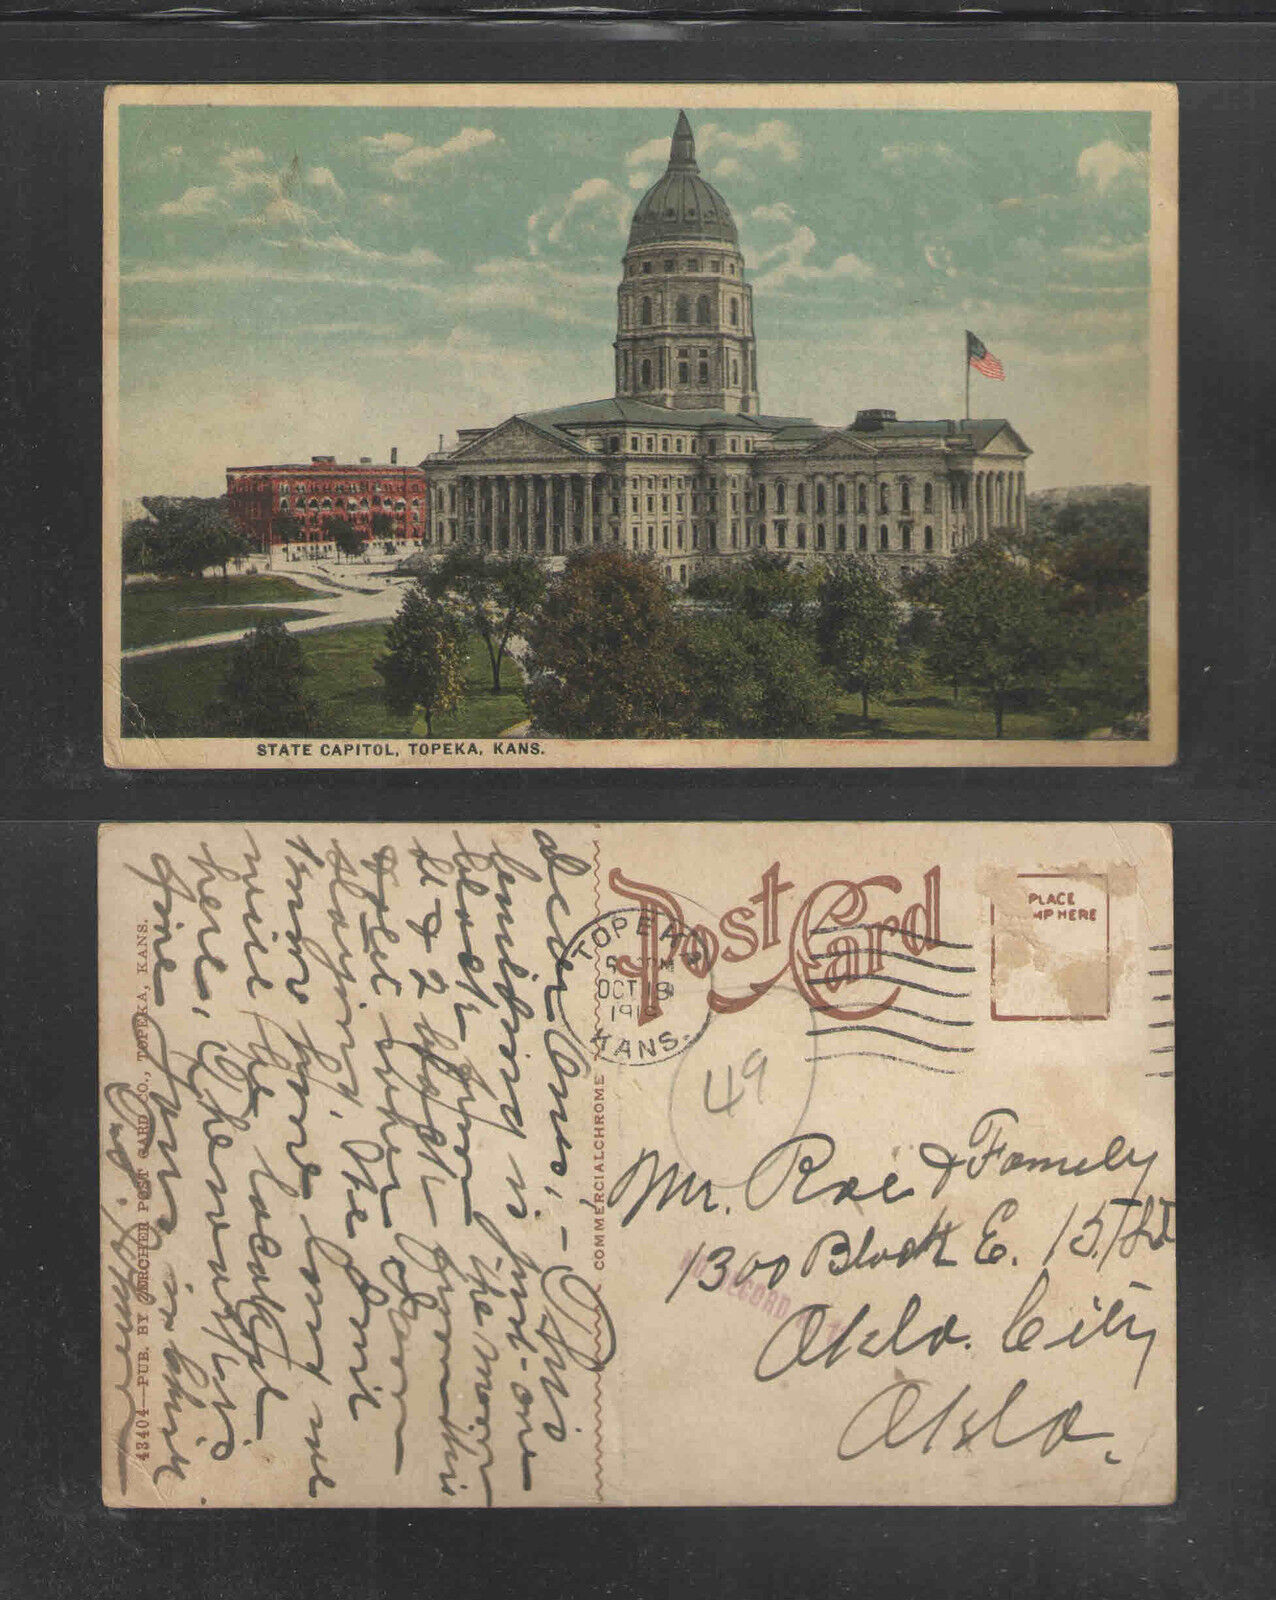 1919 STATE CAPITAL TOPEKA KANS POSTCARD No Postage Stamp